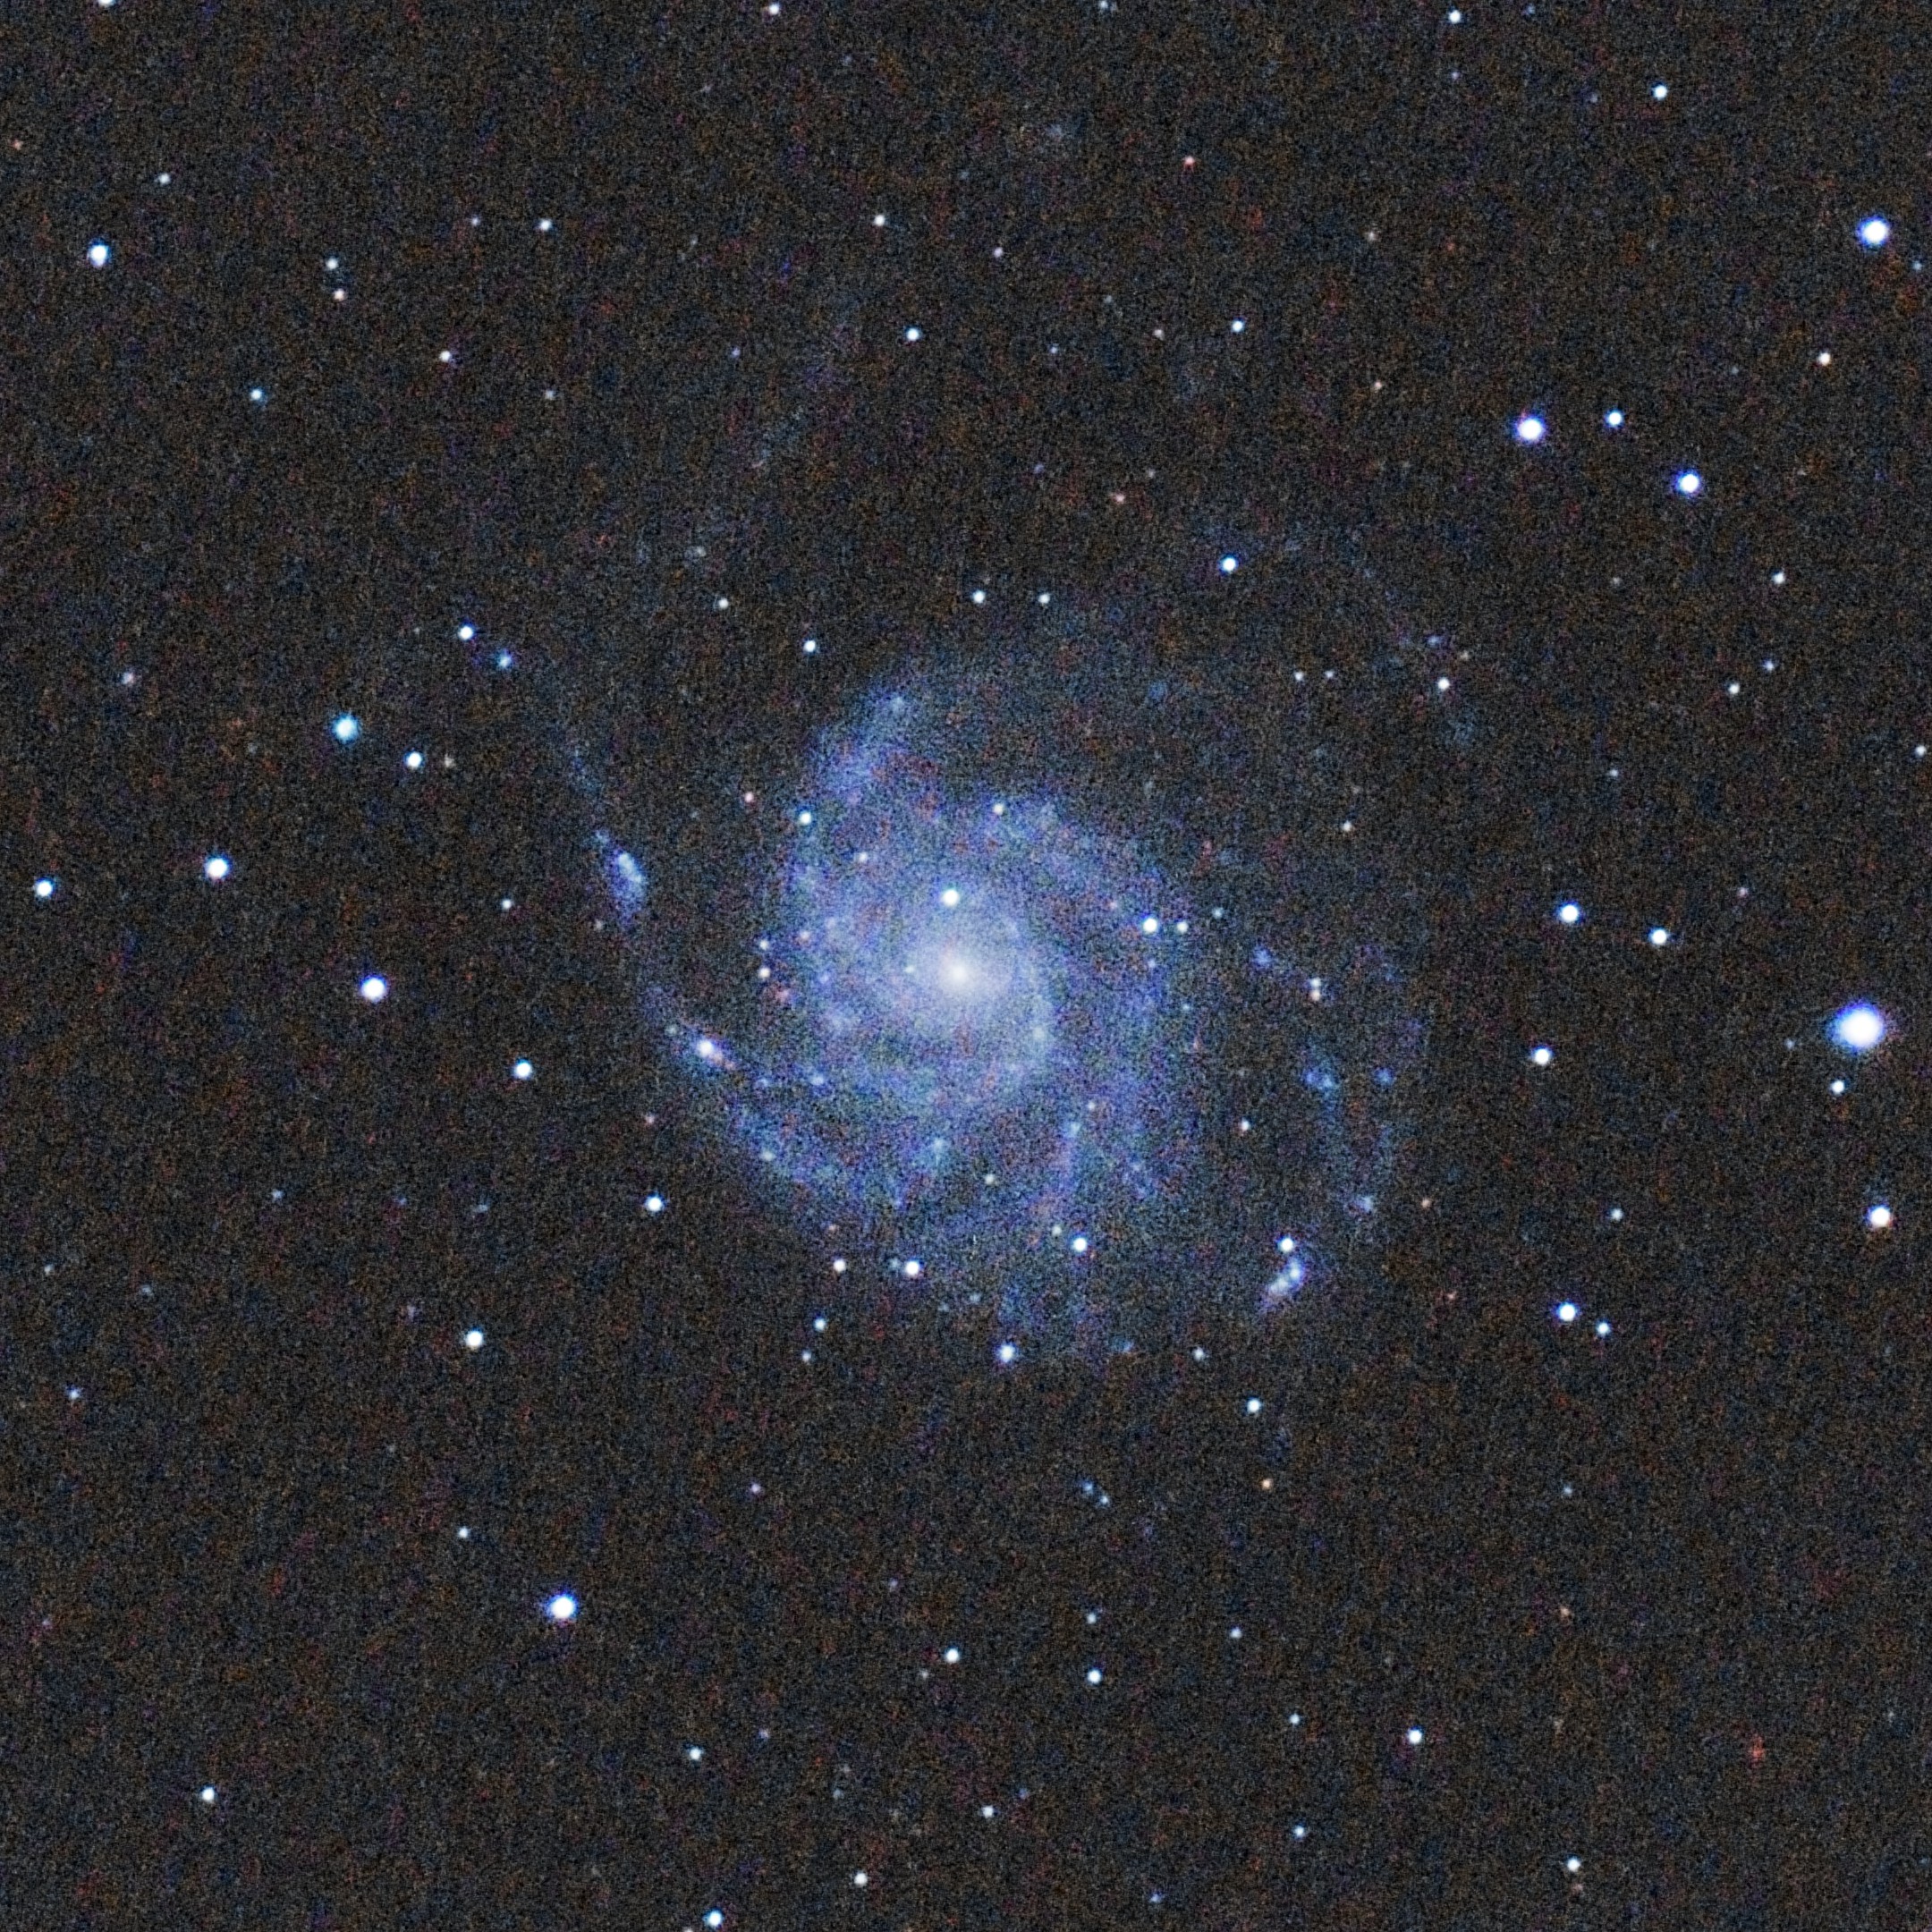 Pinwheel Galaxy (M101), my April target.